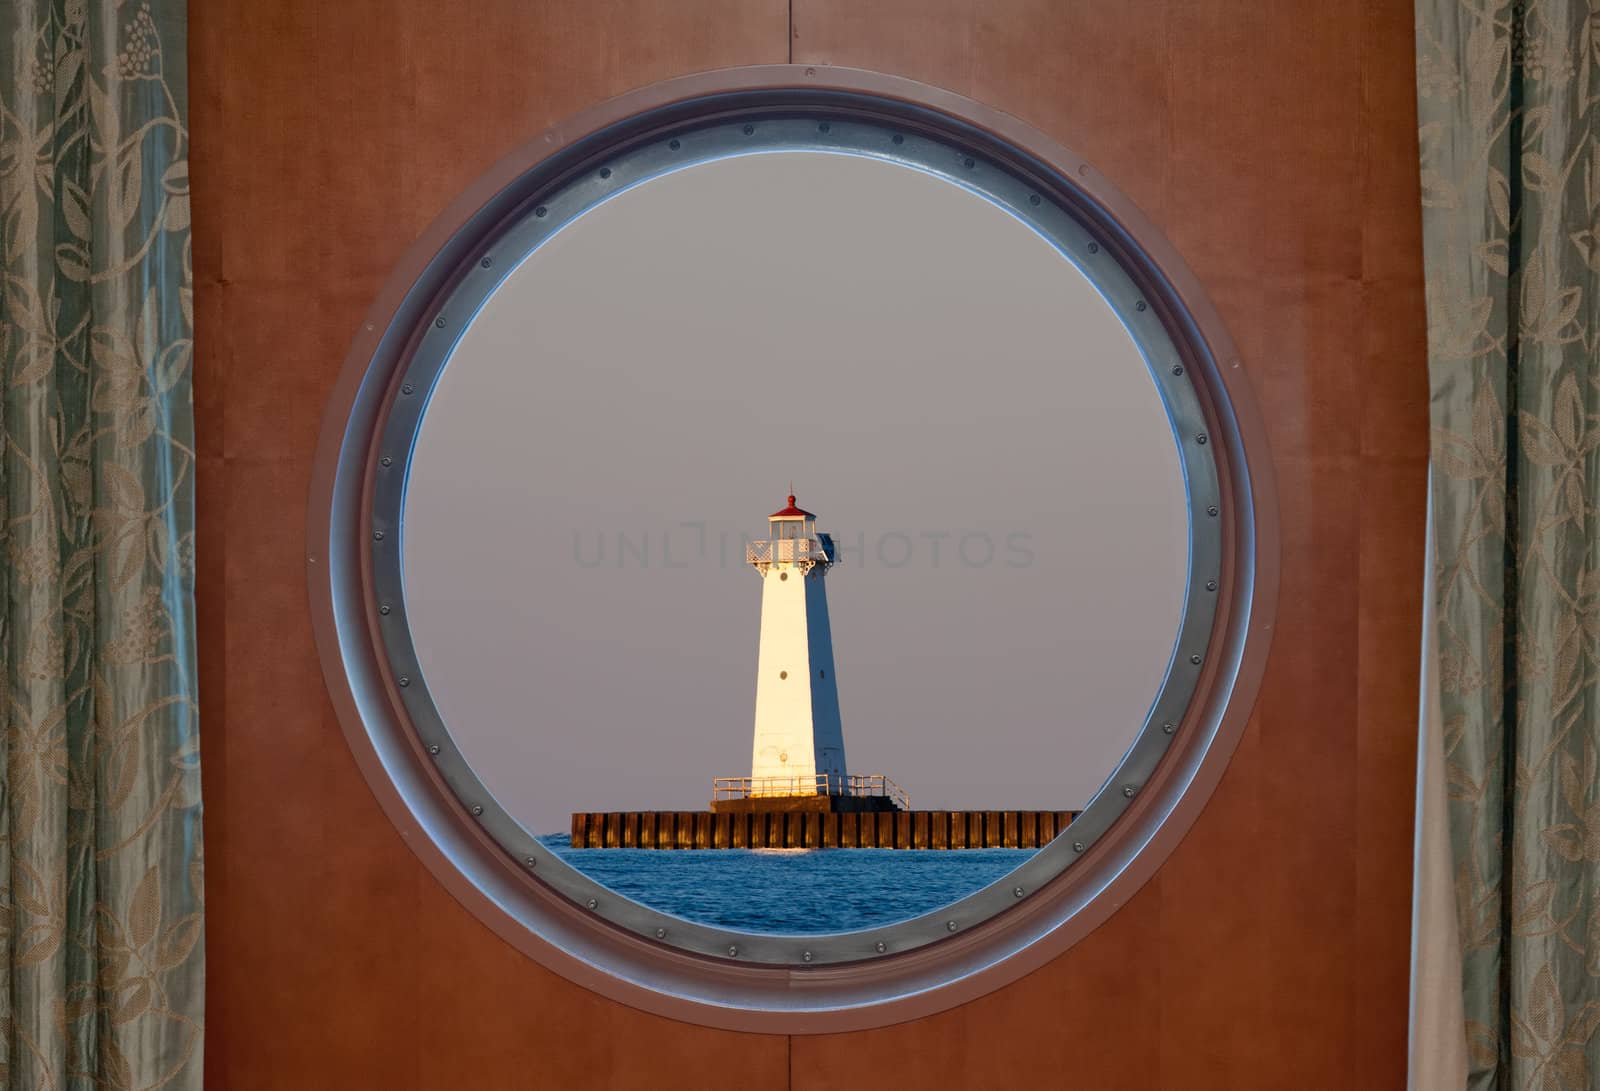 Sodus Bay Lighthouse Seen Through a Porthole by sbonk